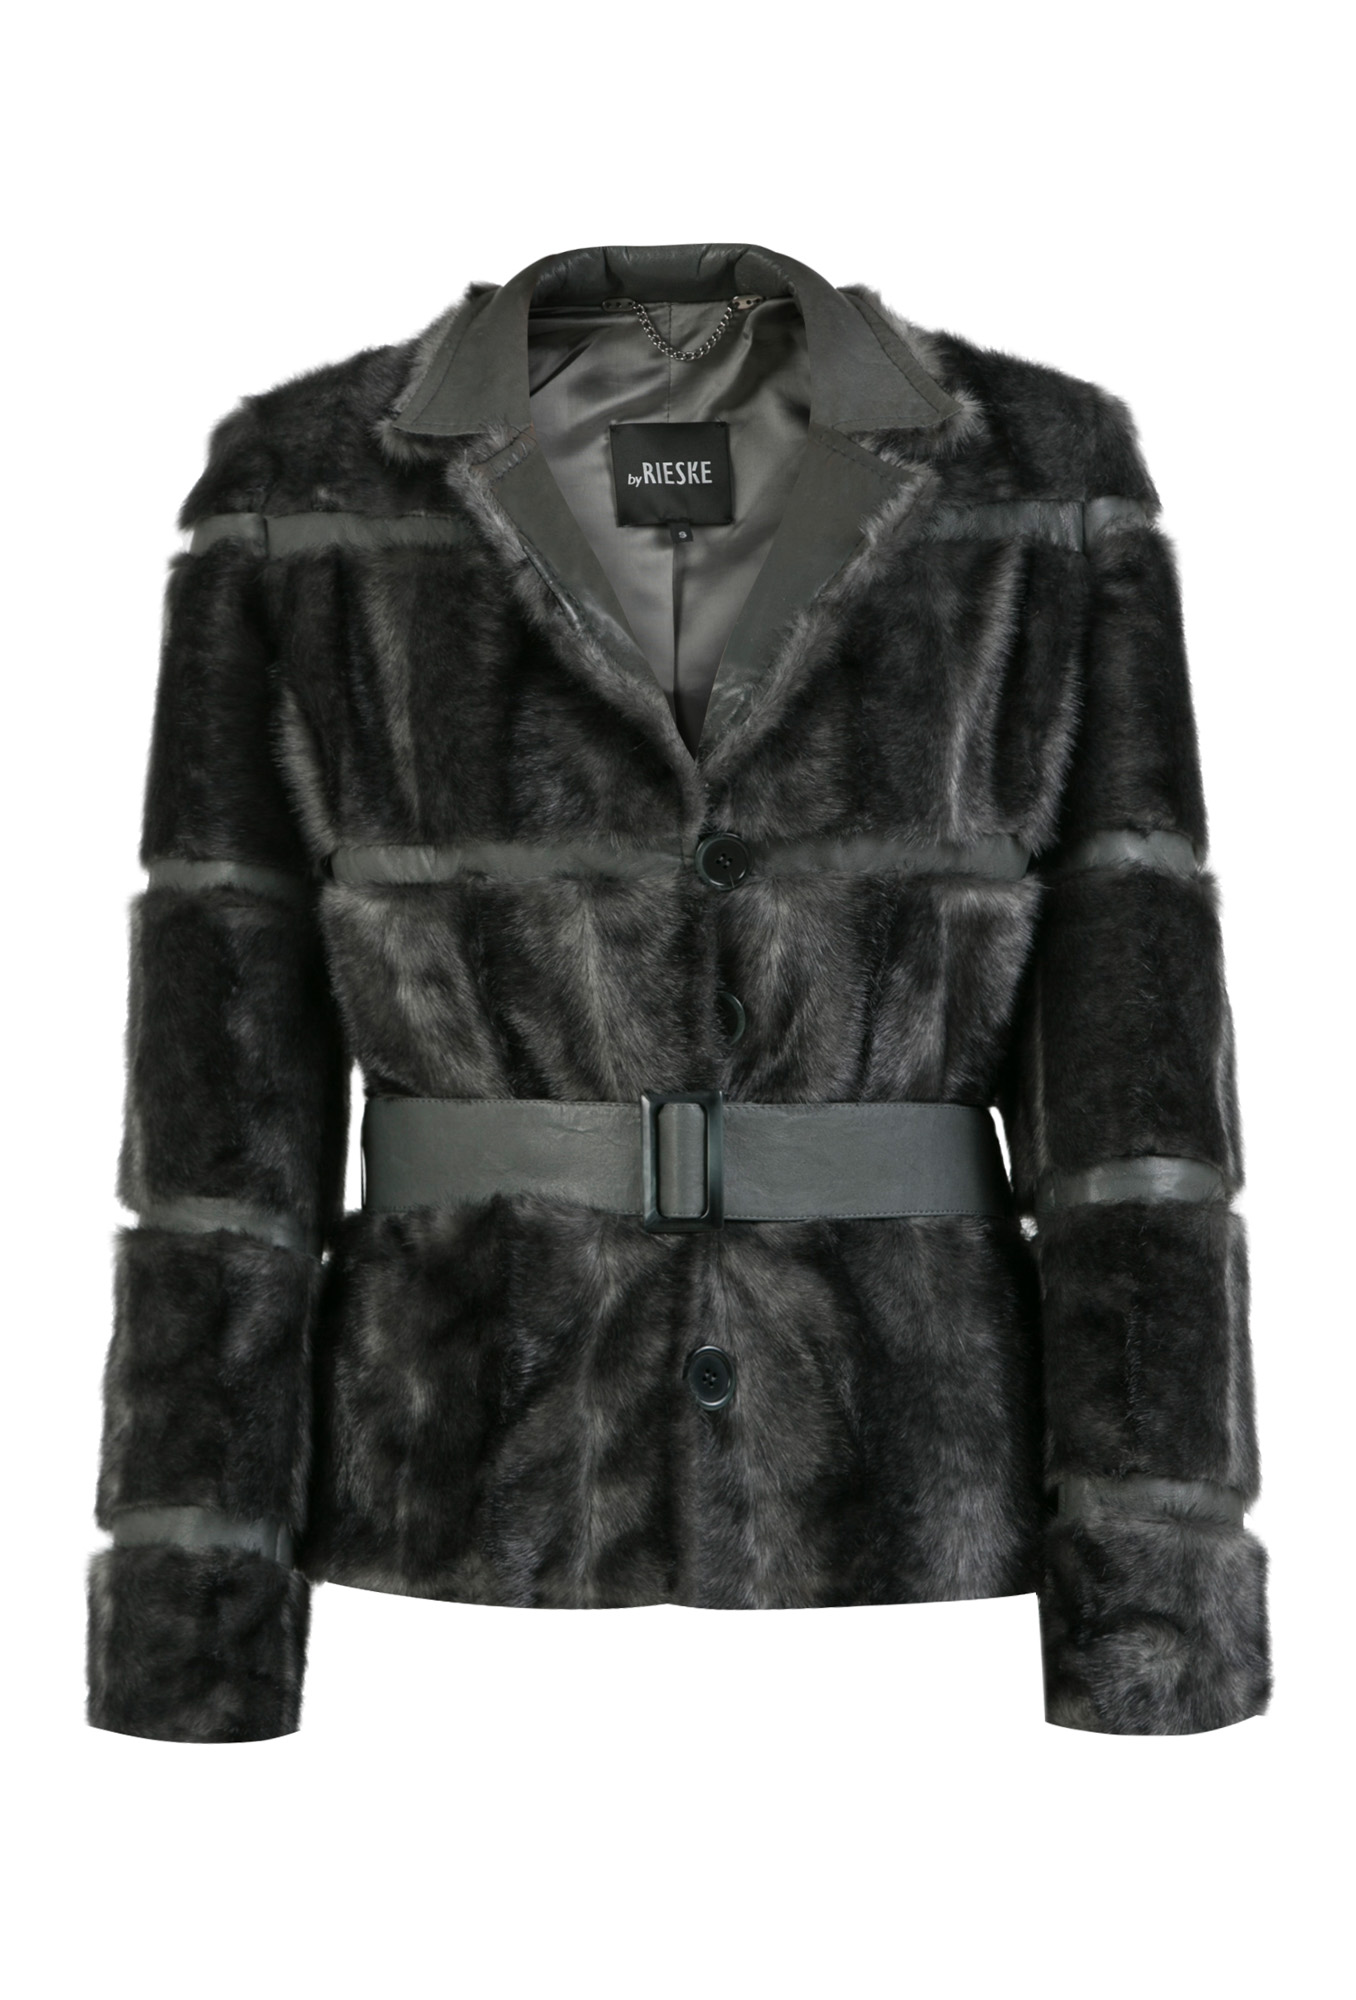 fur jacket, gray fur jacket, gray fur jacket, faux fur jacket with leather belt, fur jacket with leather belt, premium quality jacket, limited edition gray fur jacket, trendy fur jacket, premium fur jacket